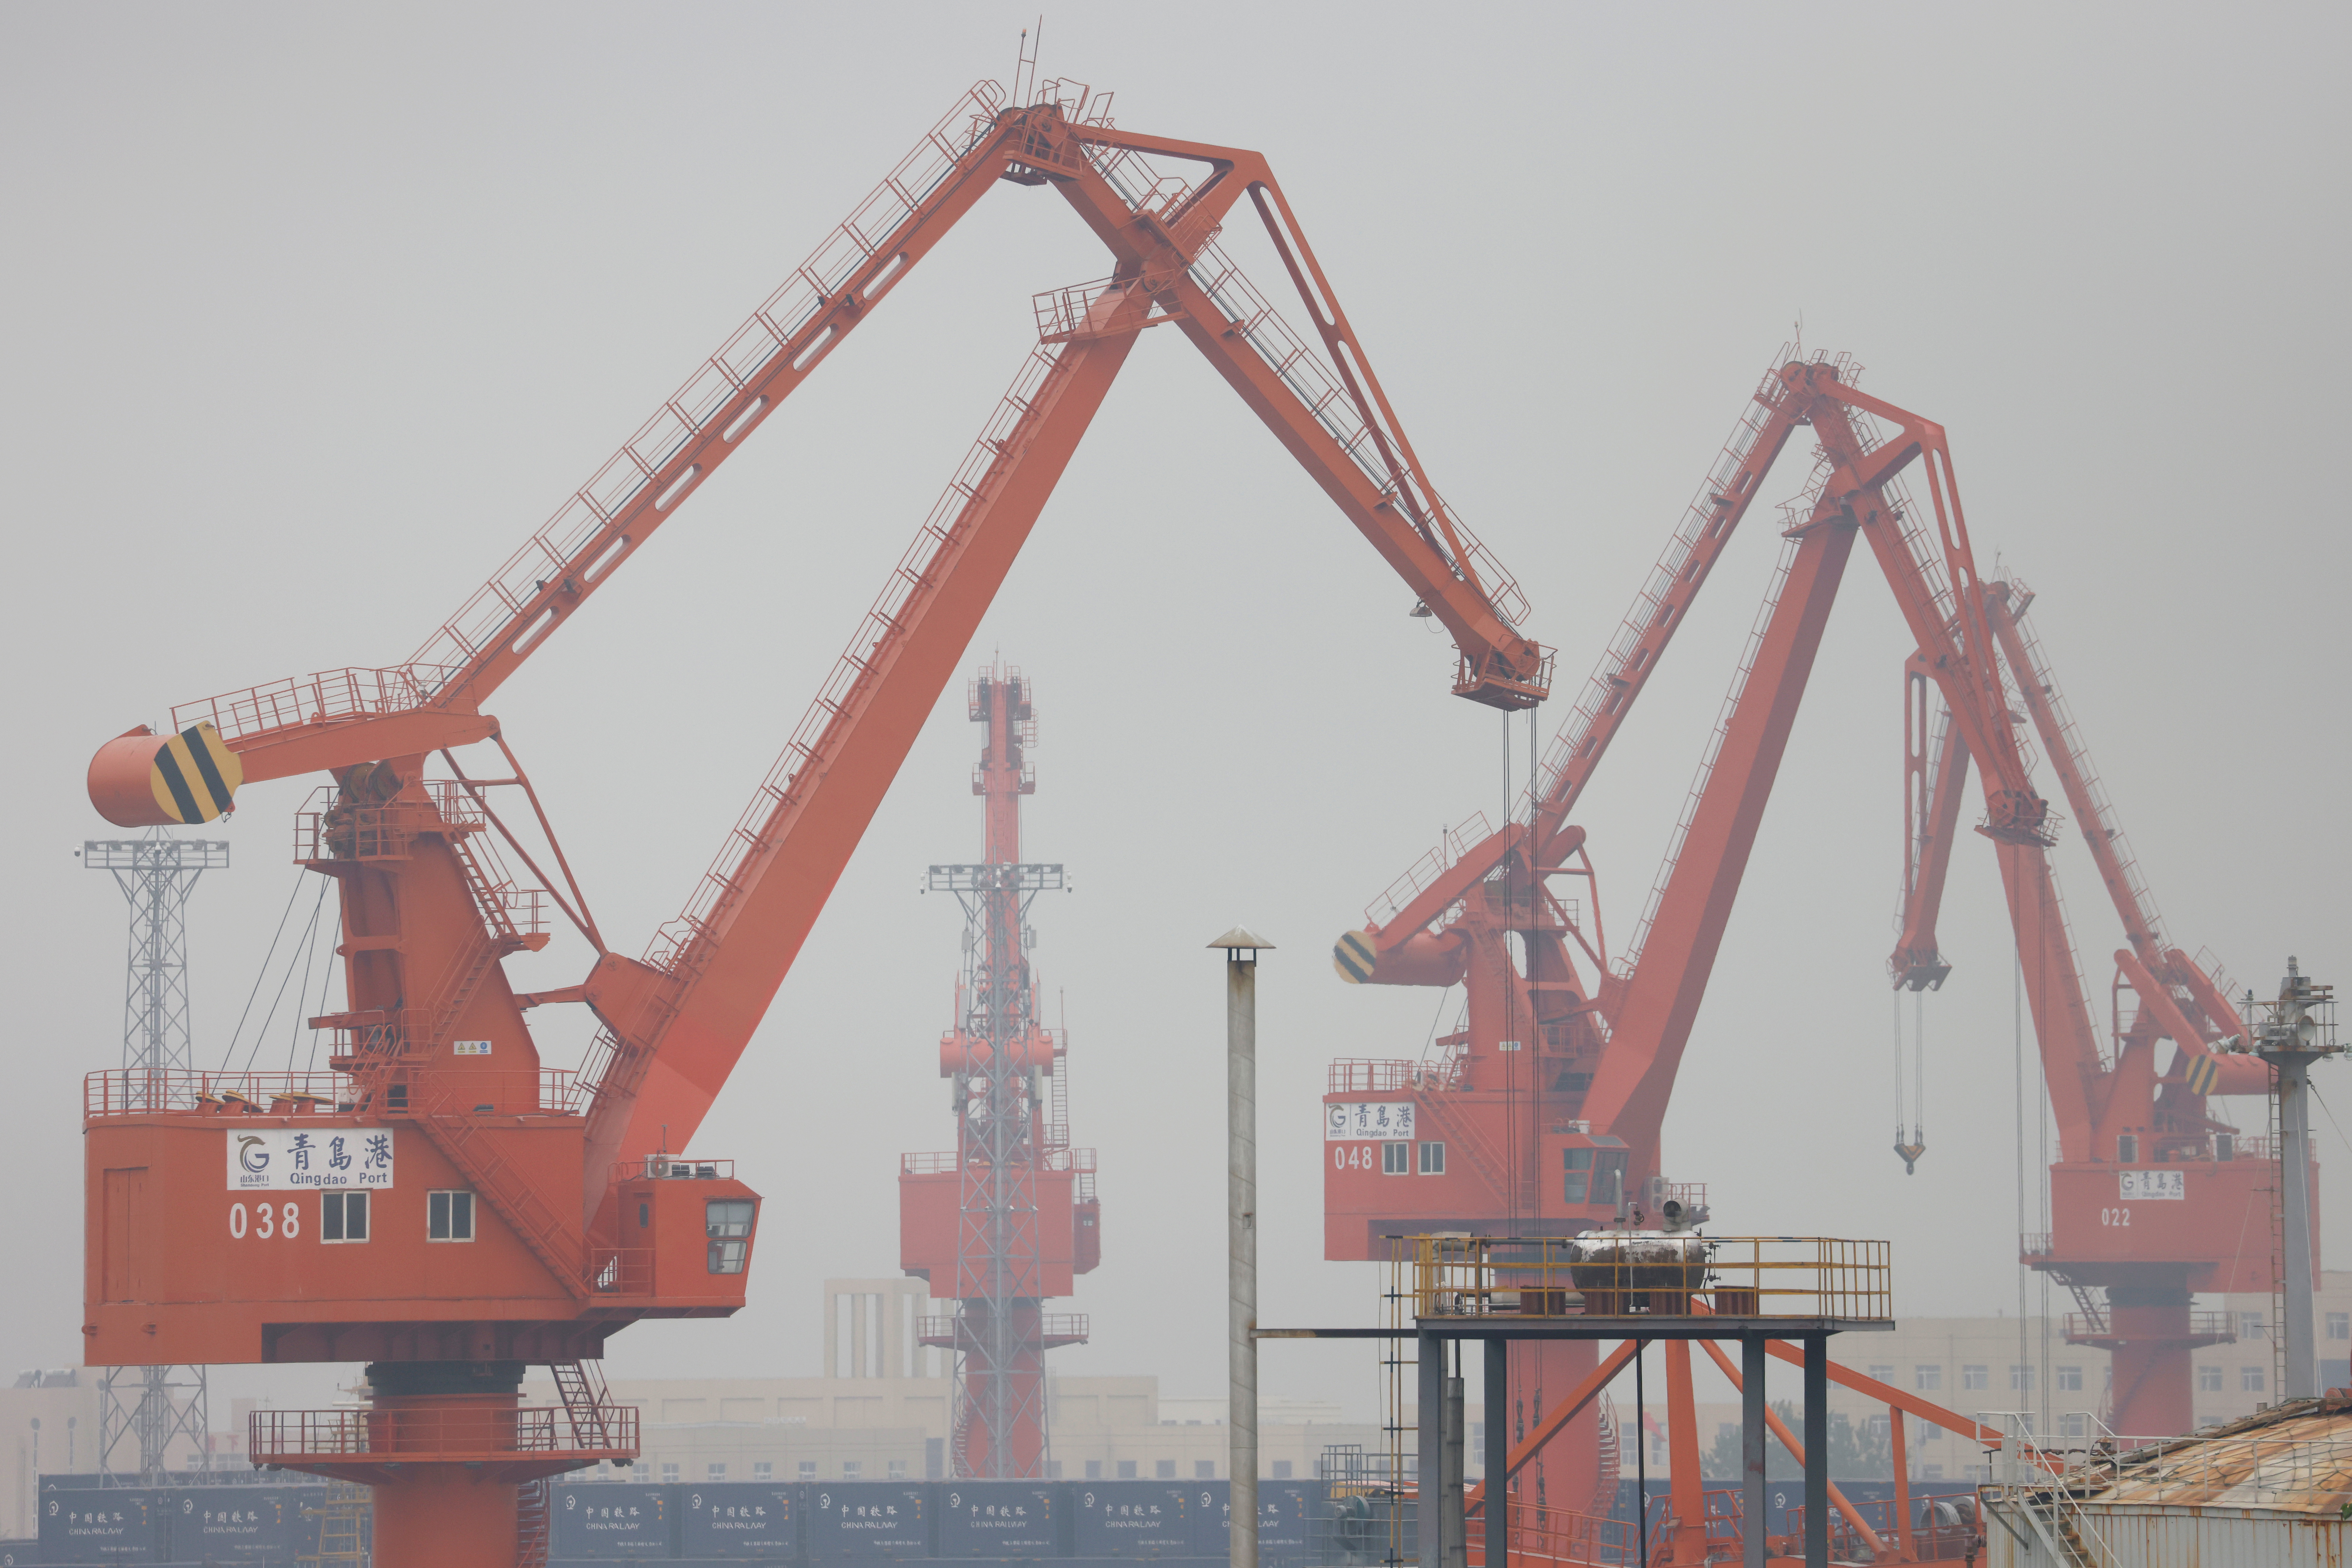 Cranes are seen at the port of Qingdao